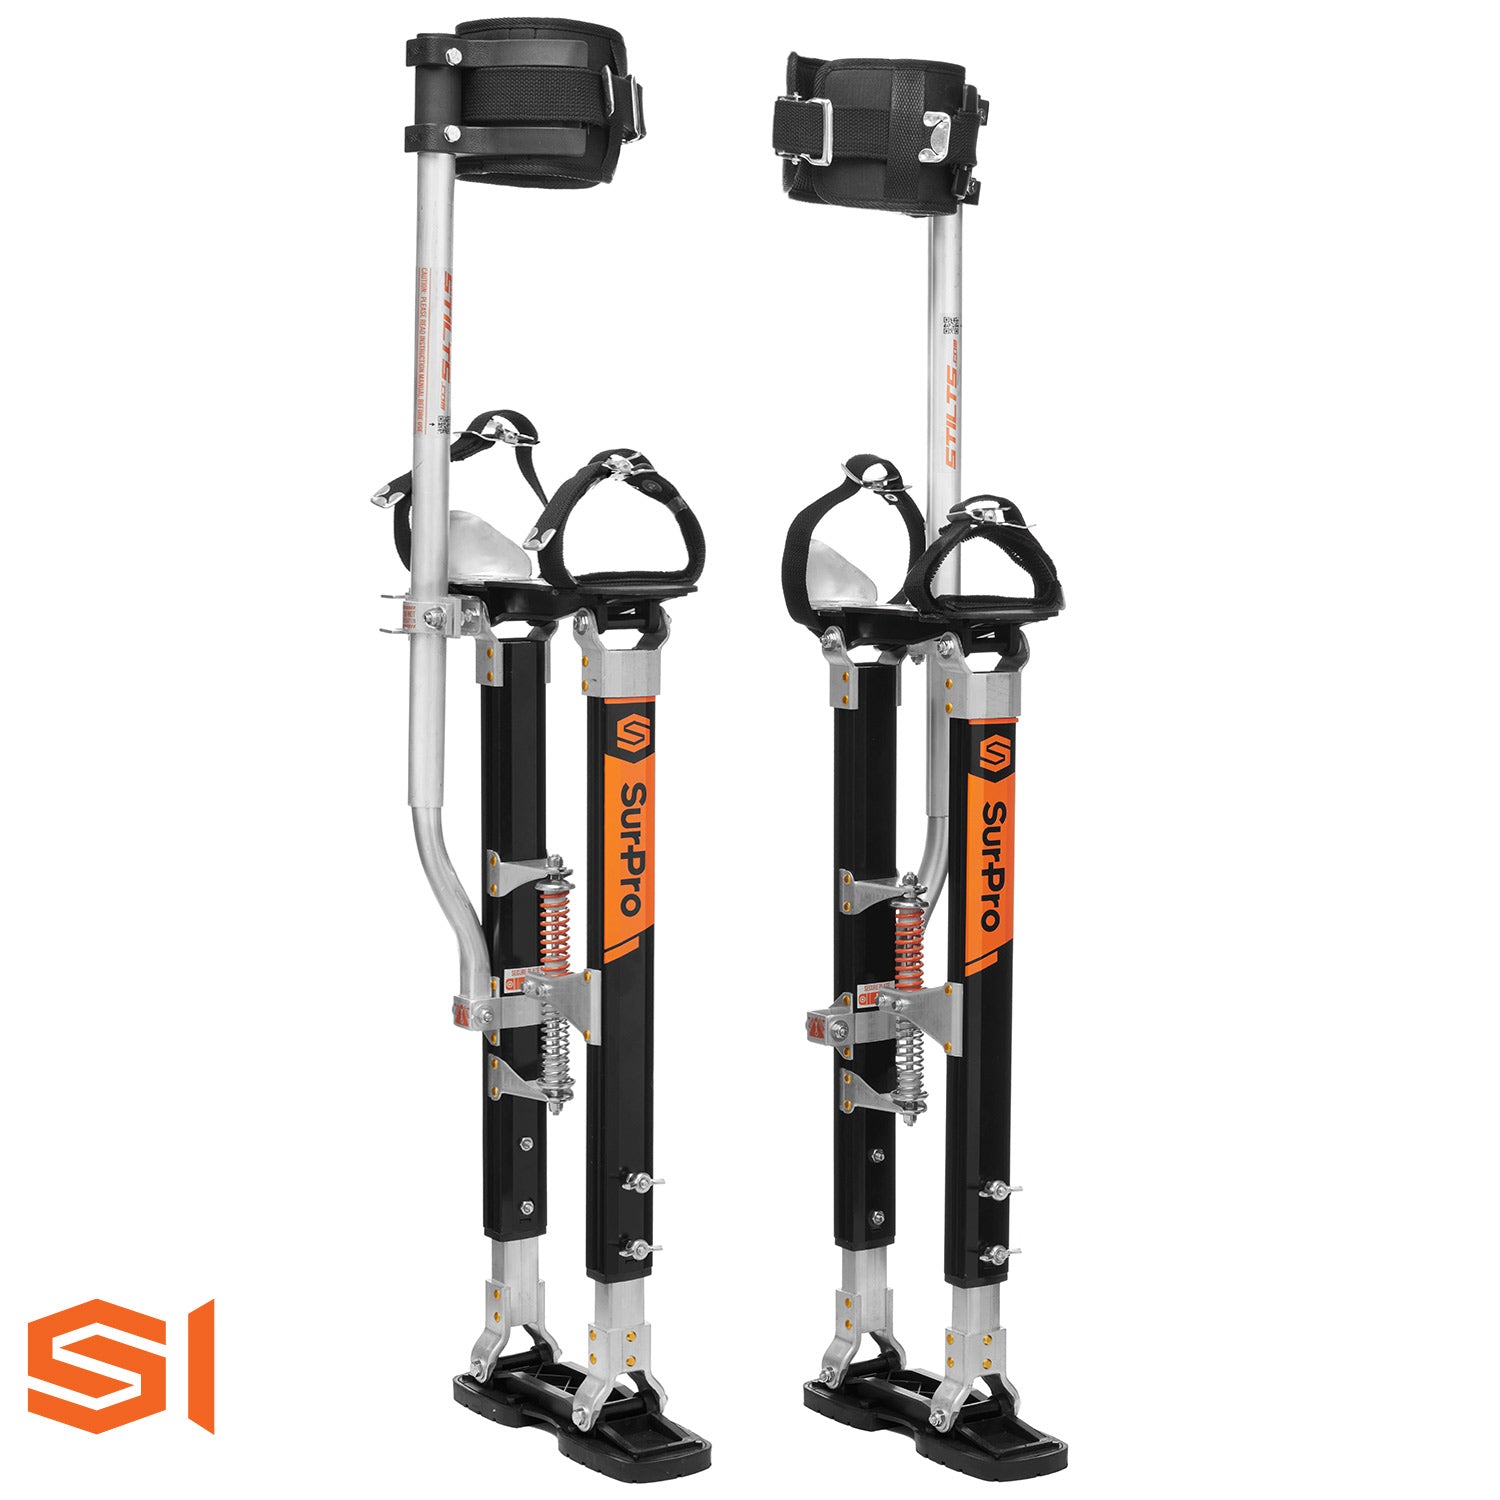 SurPro S1 Magnesium lightweight drywall stilts